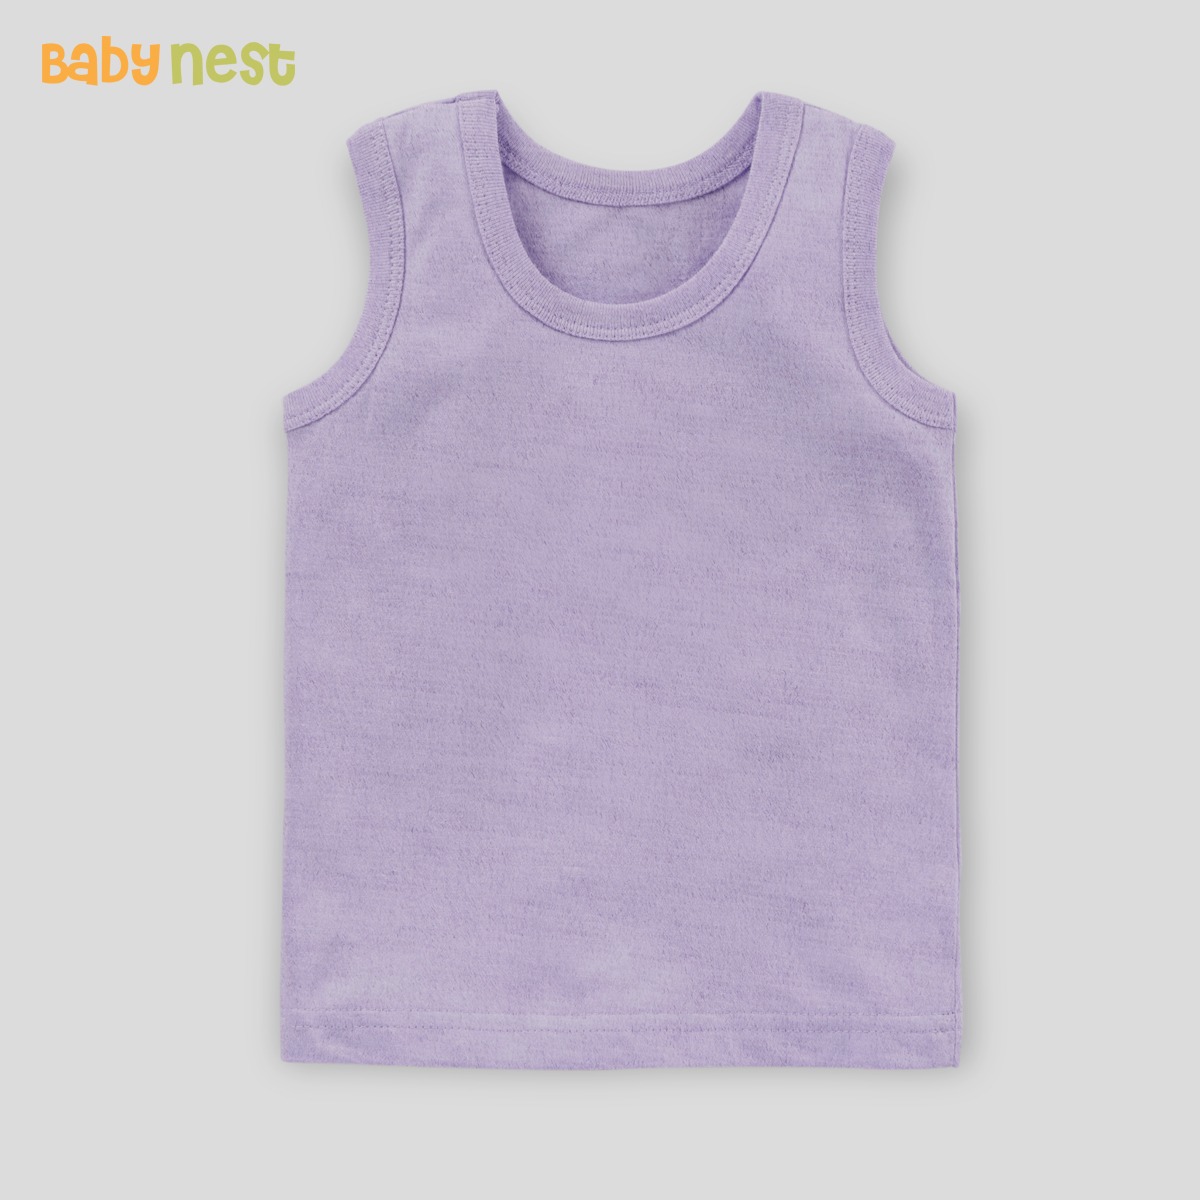 BNBBS-169 – Plain – Sandos For Kids – Plain Purple